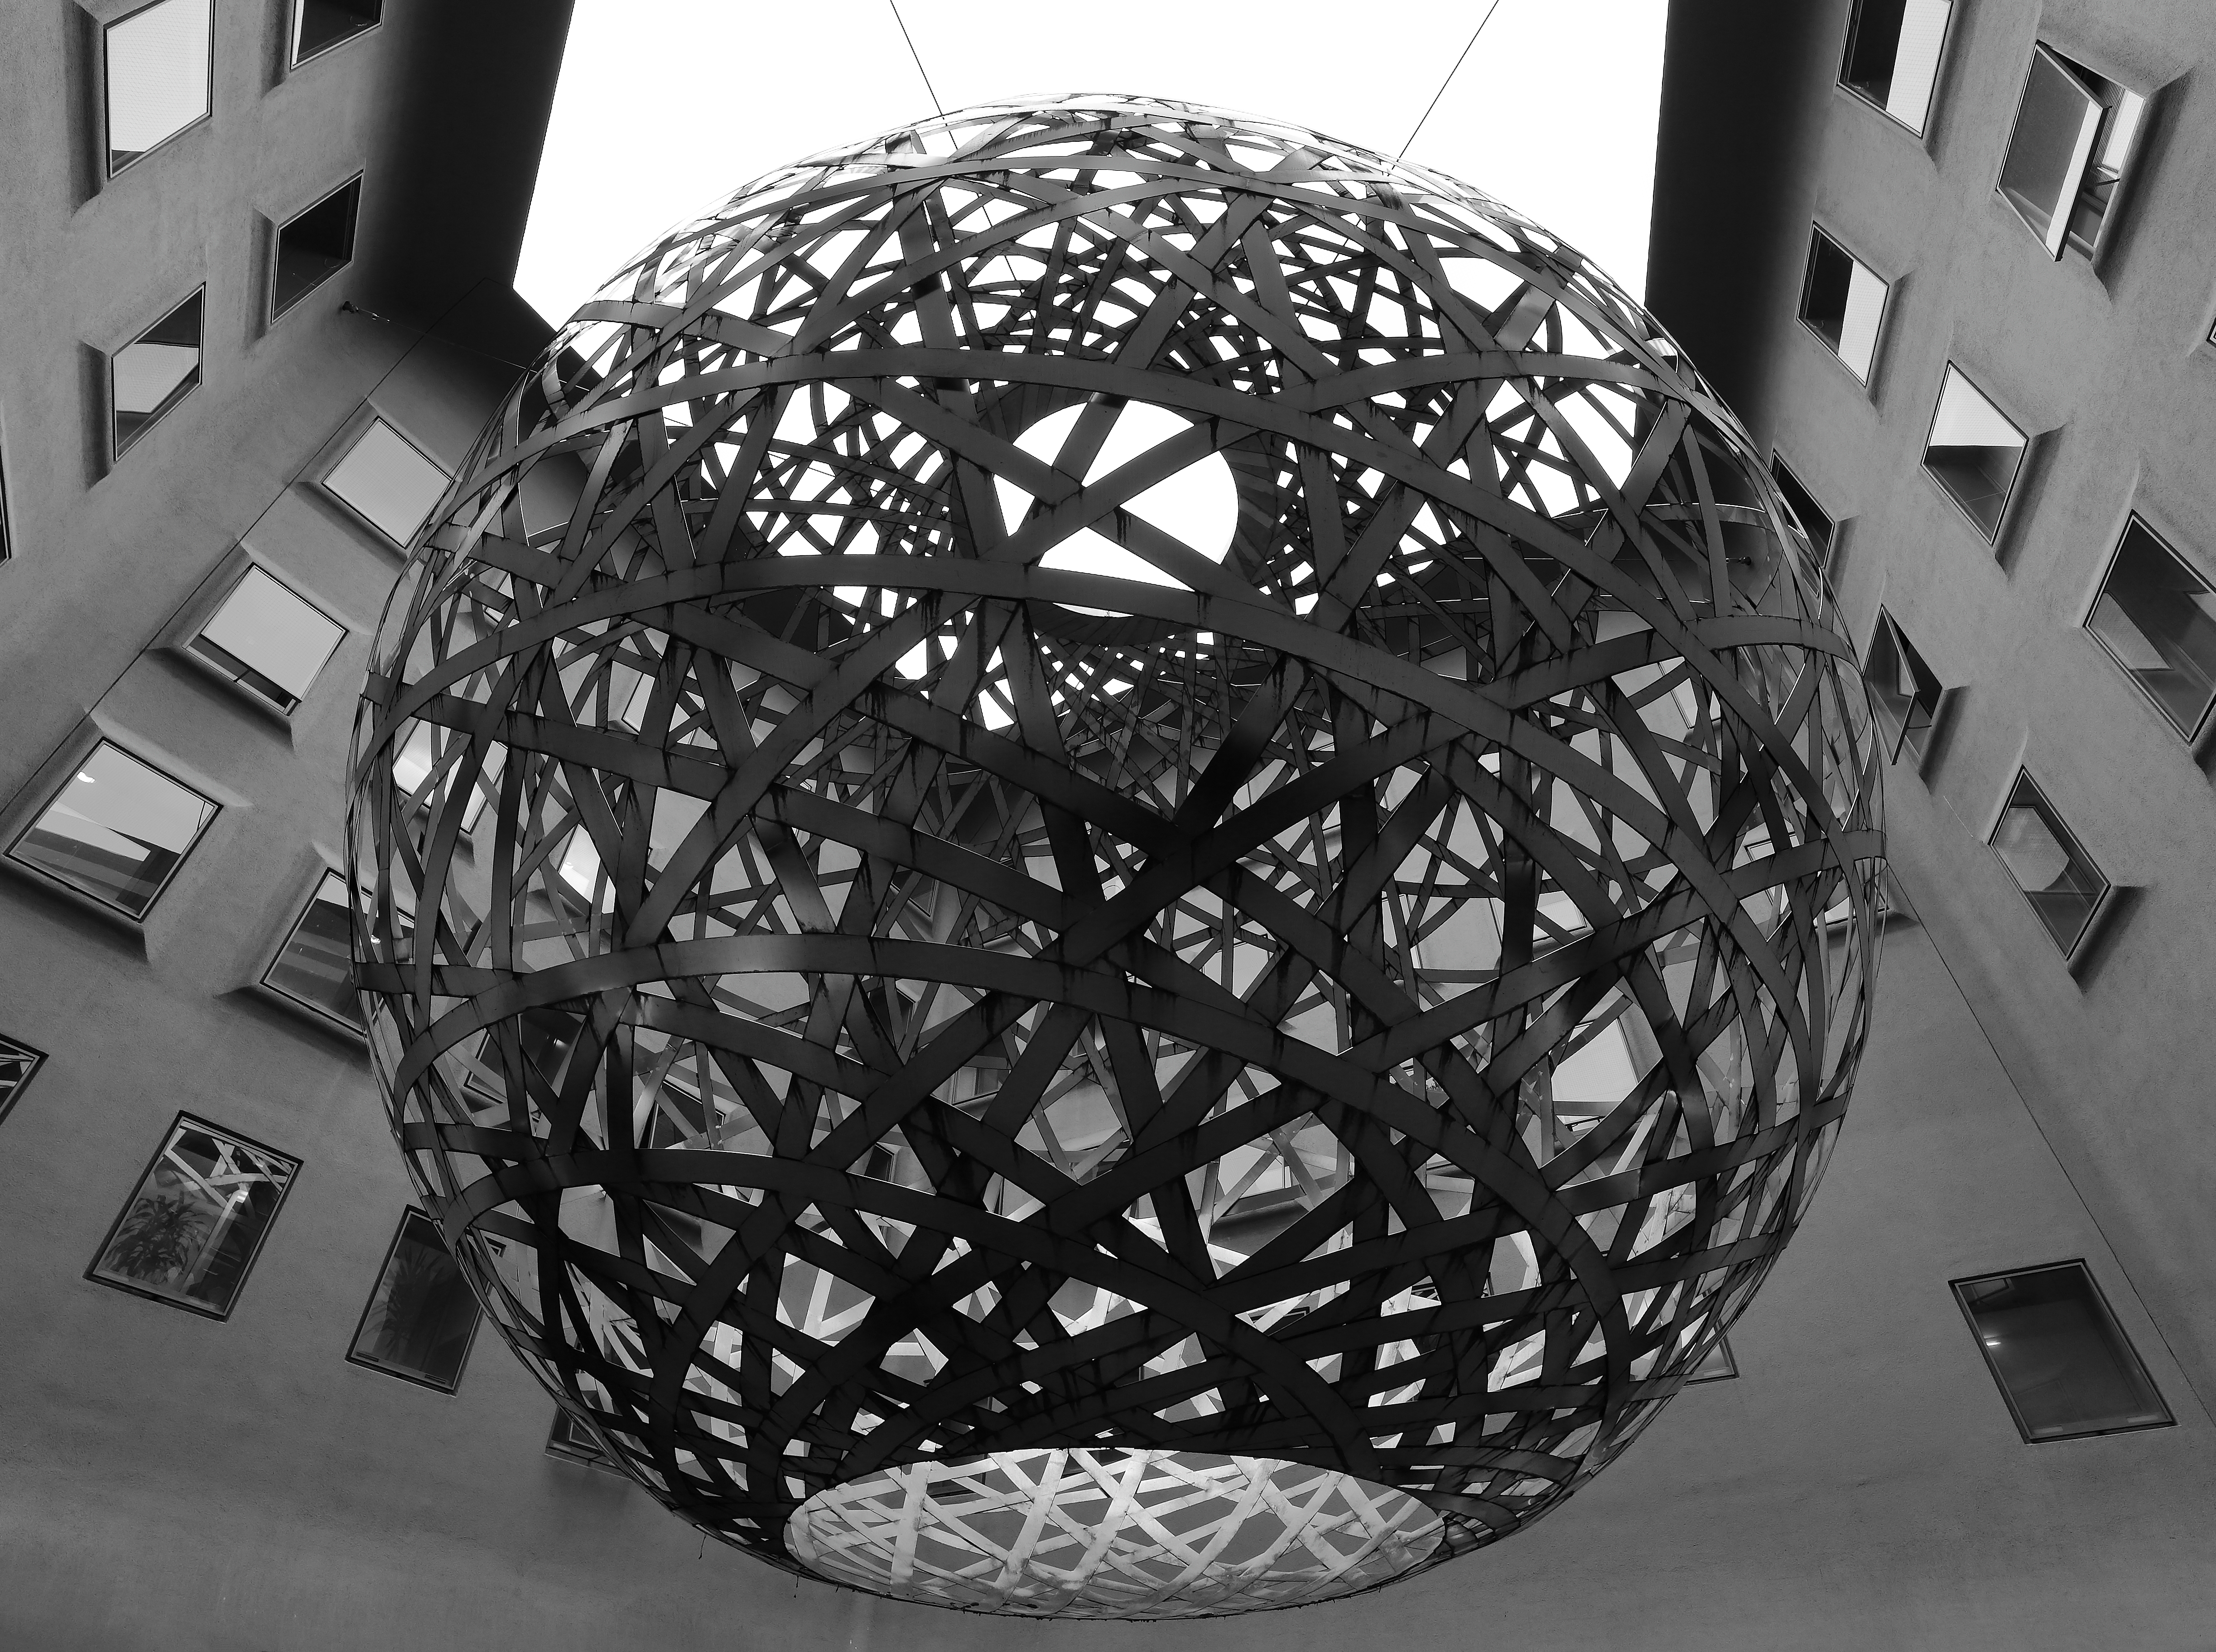 Fünf Höfe - Sphere, Munich, April 2017 -01